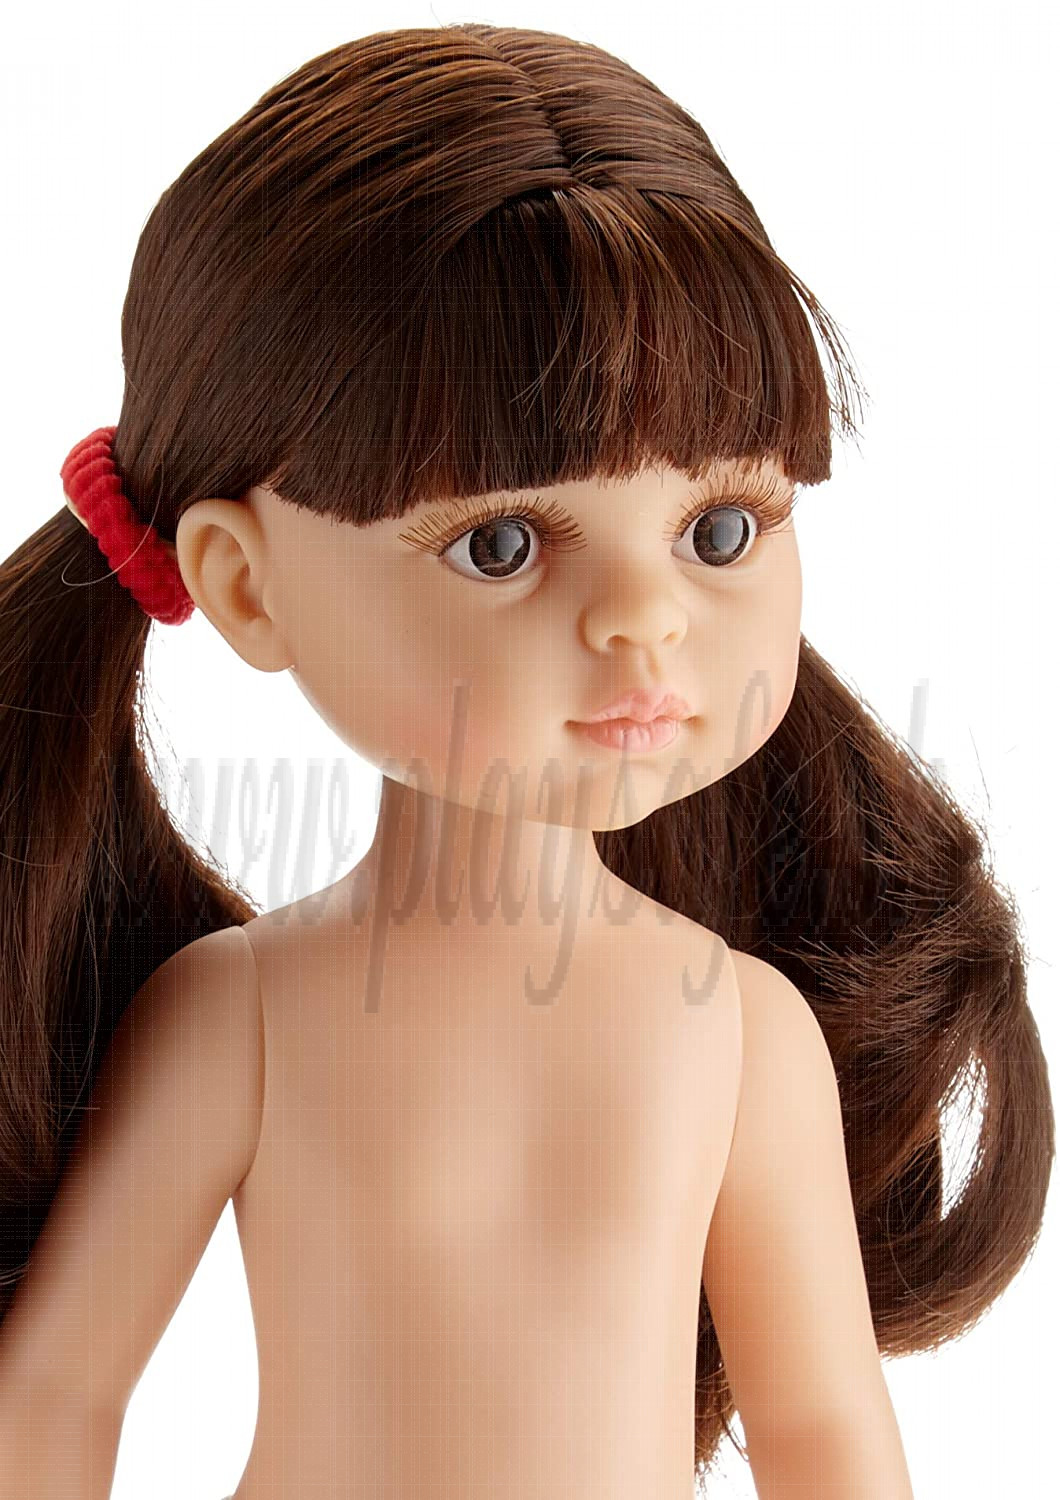 Paola Reina Las Amigas Doll Carol, 32cm Naked